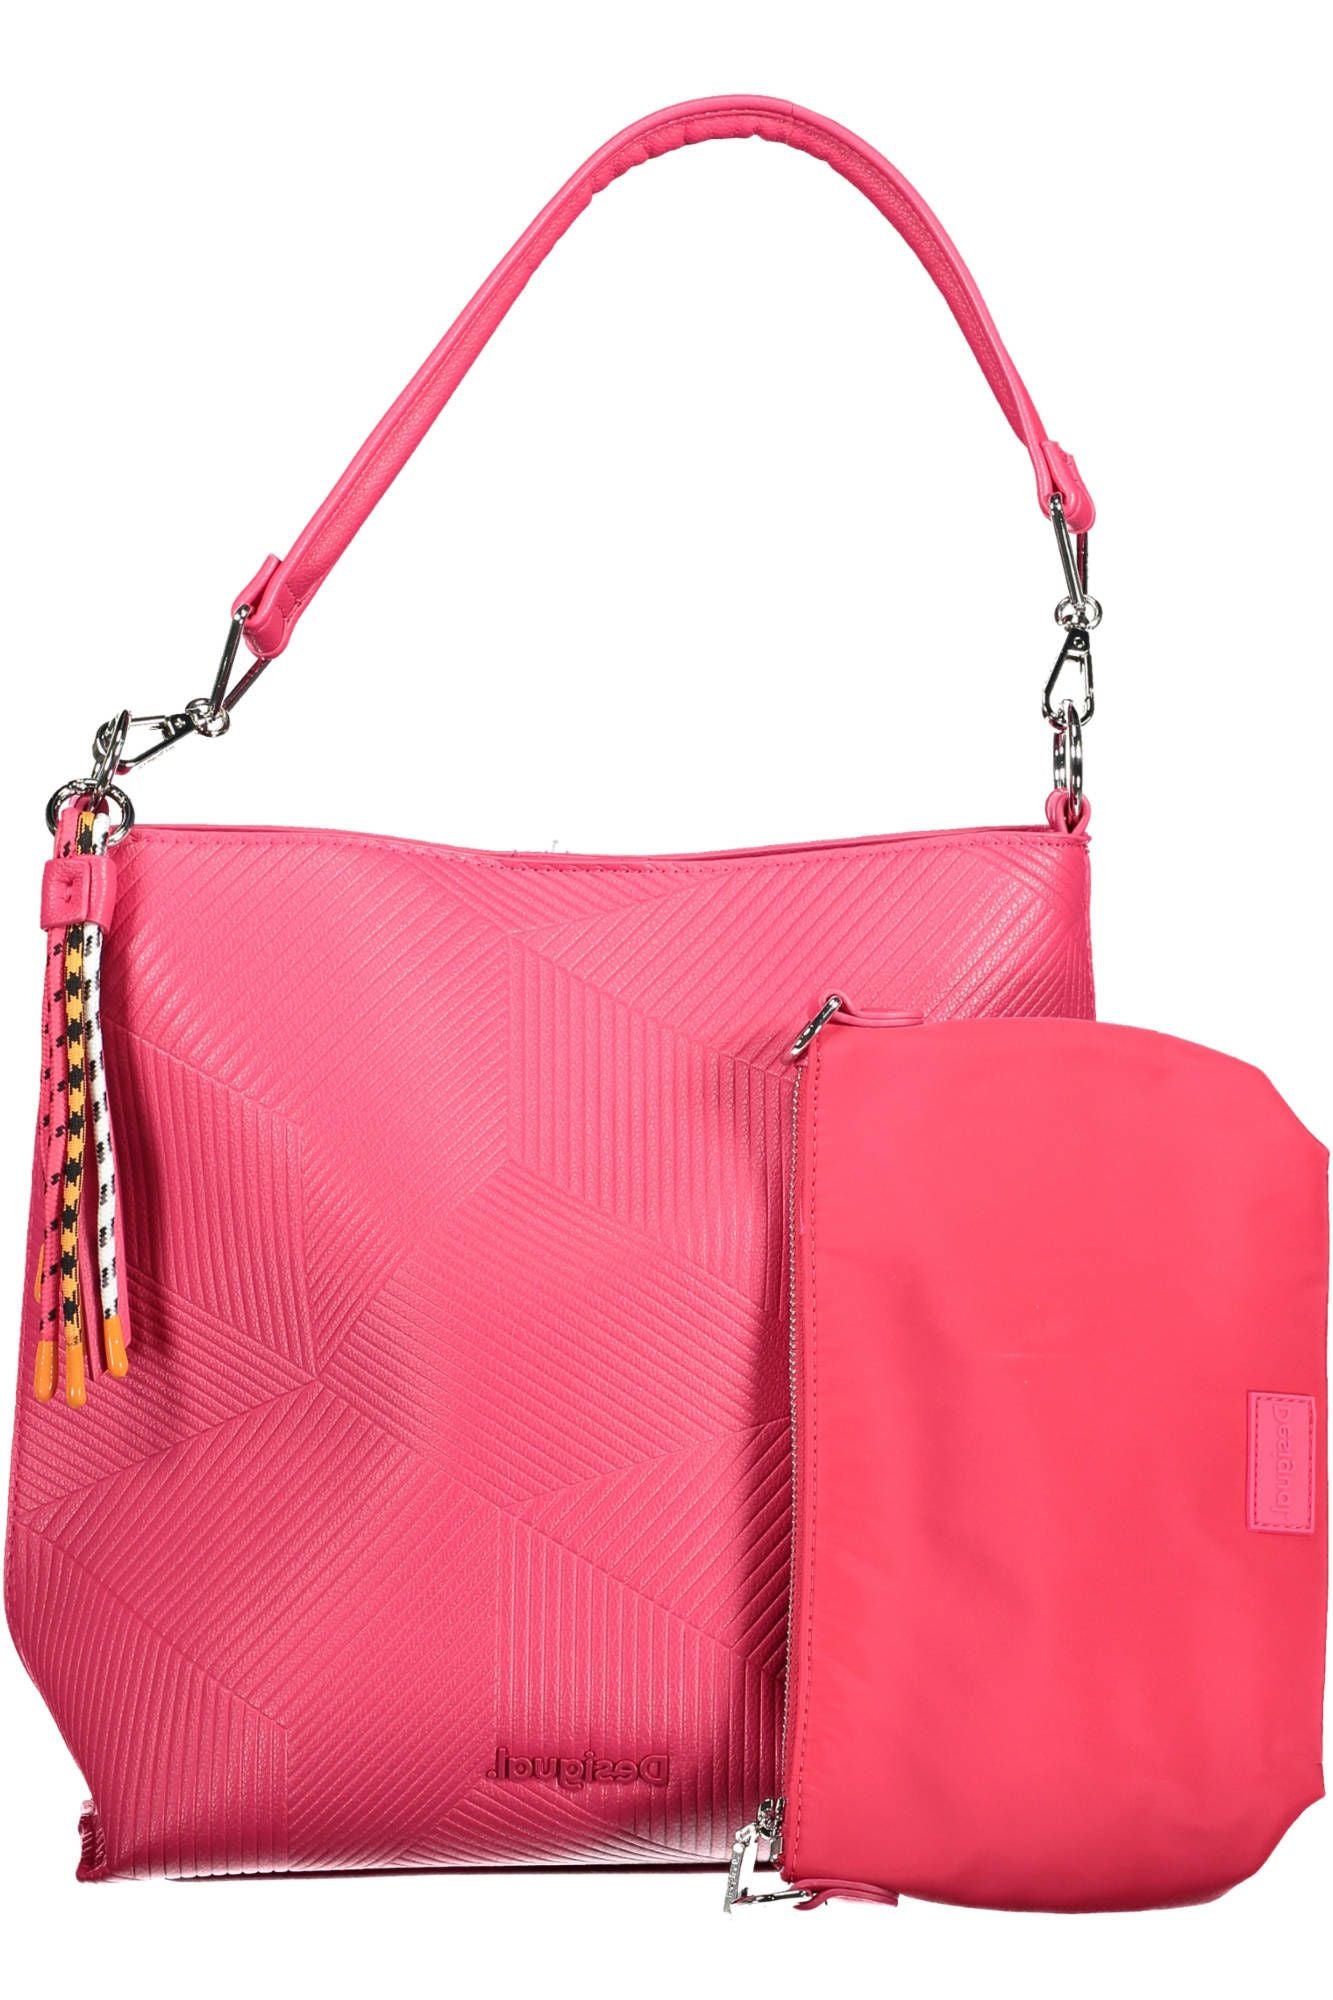 Vibrant Pink Convertible Handbag